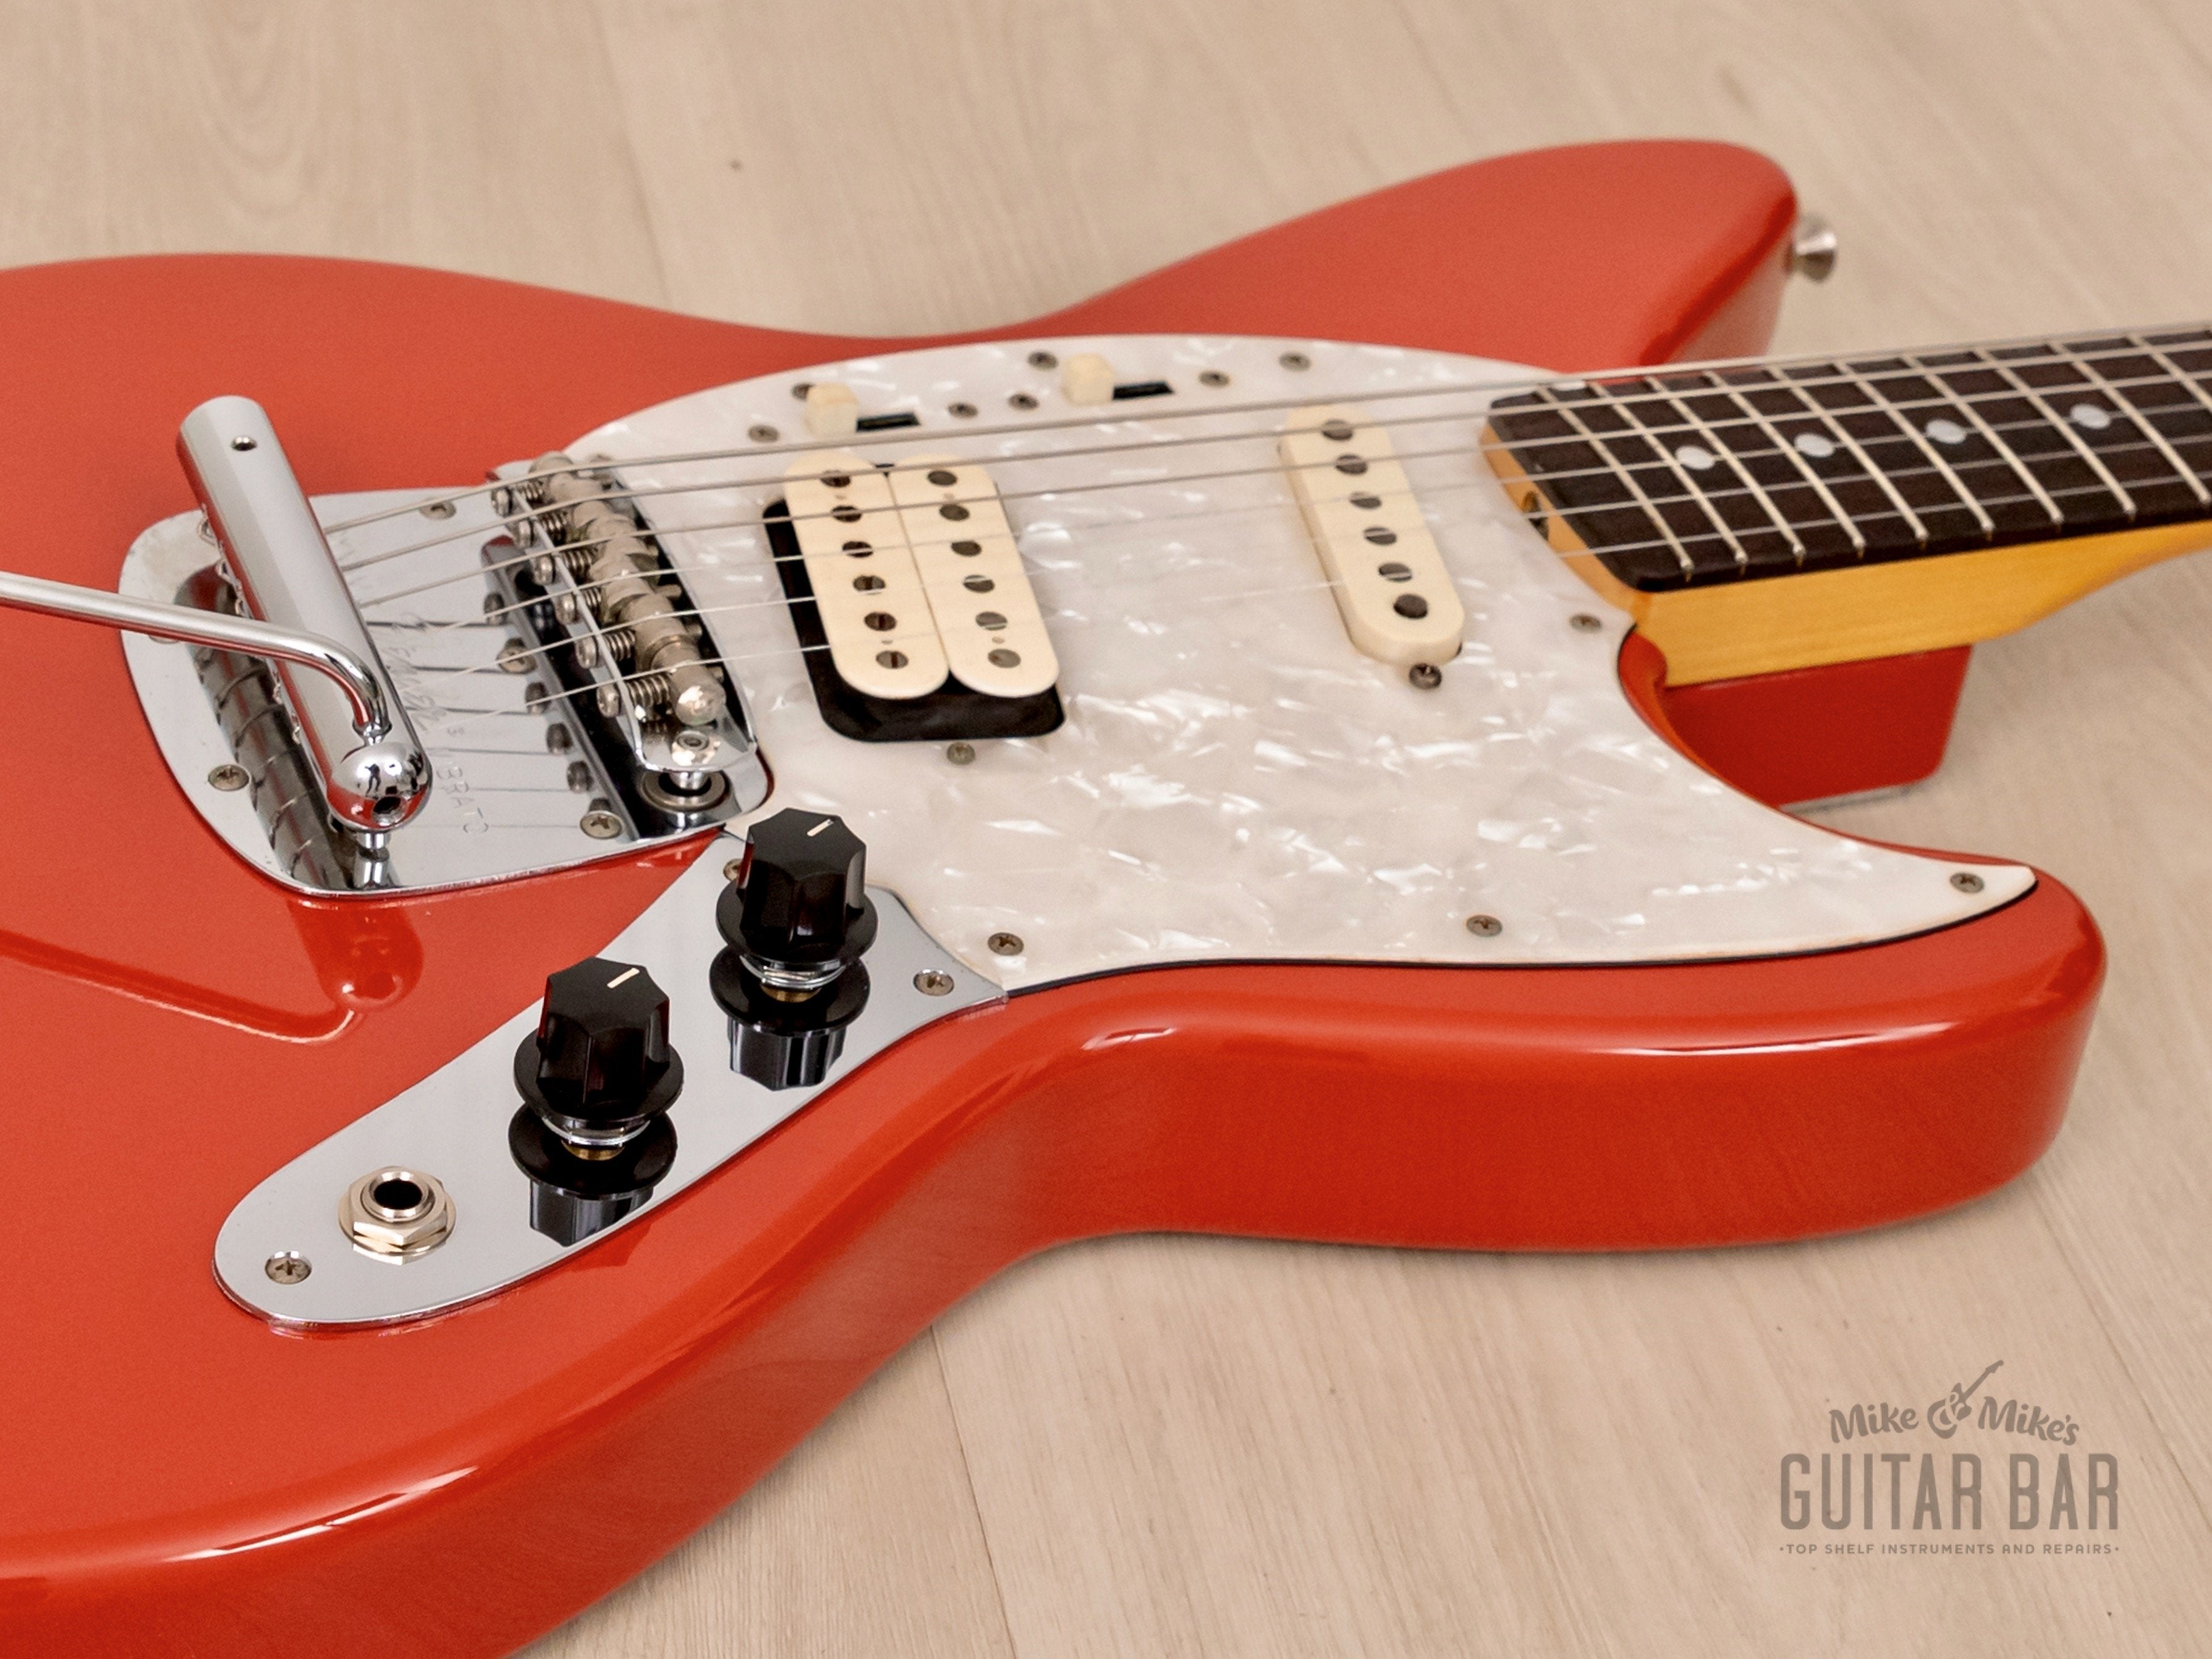 1996 Fender Jag-Stang JGS-65 Kurt Cobain Signature Offset Guitar Fiesta Red, 1st Year, Japan MIJ